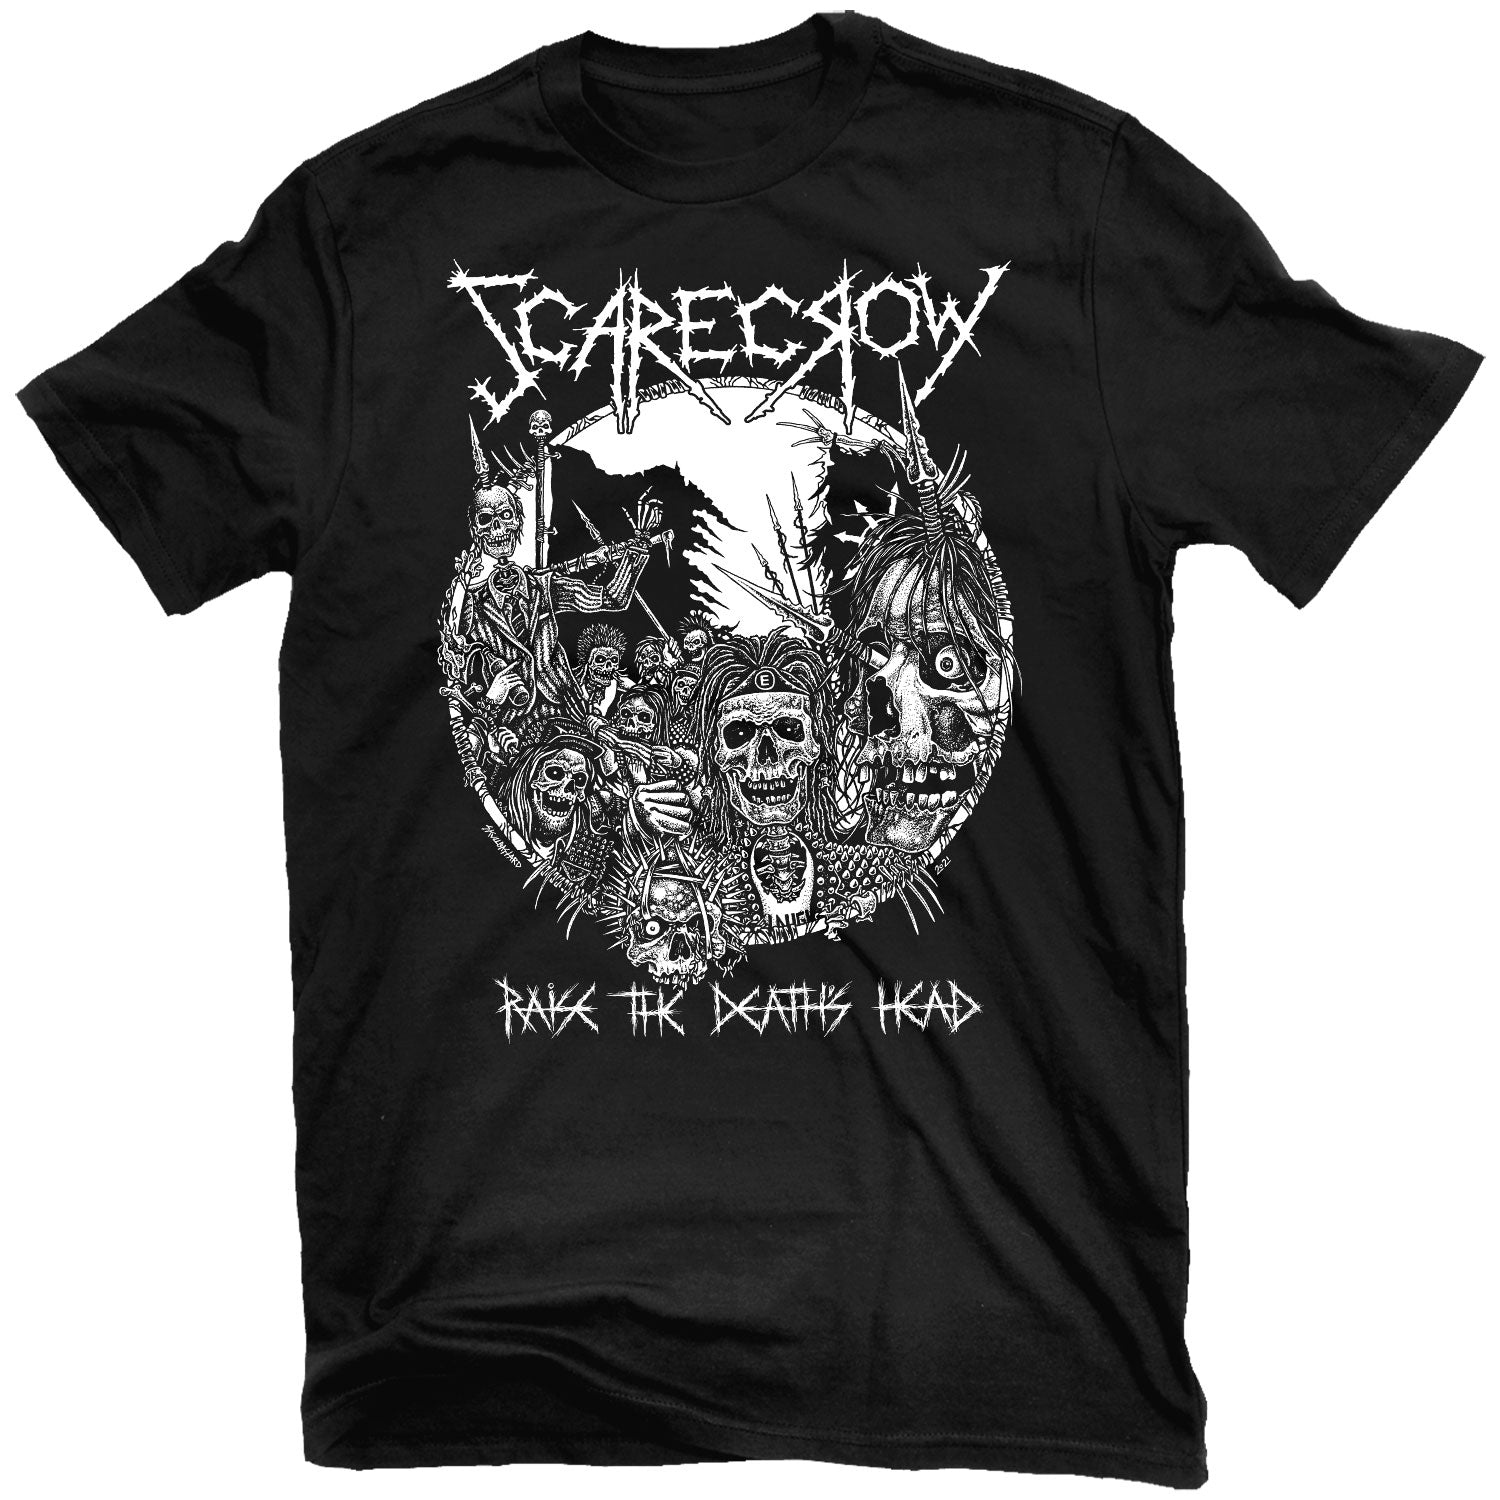 Scarecrow "Raise the Death's Head" T-Shirt